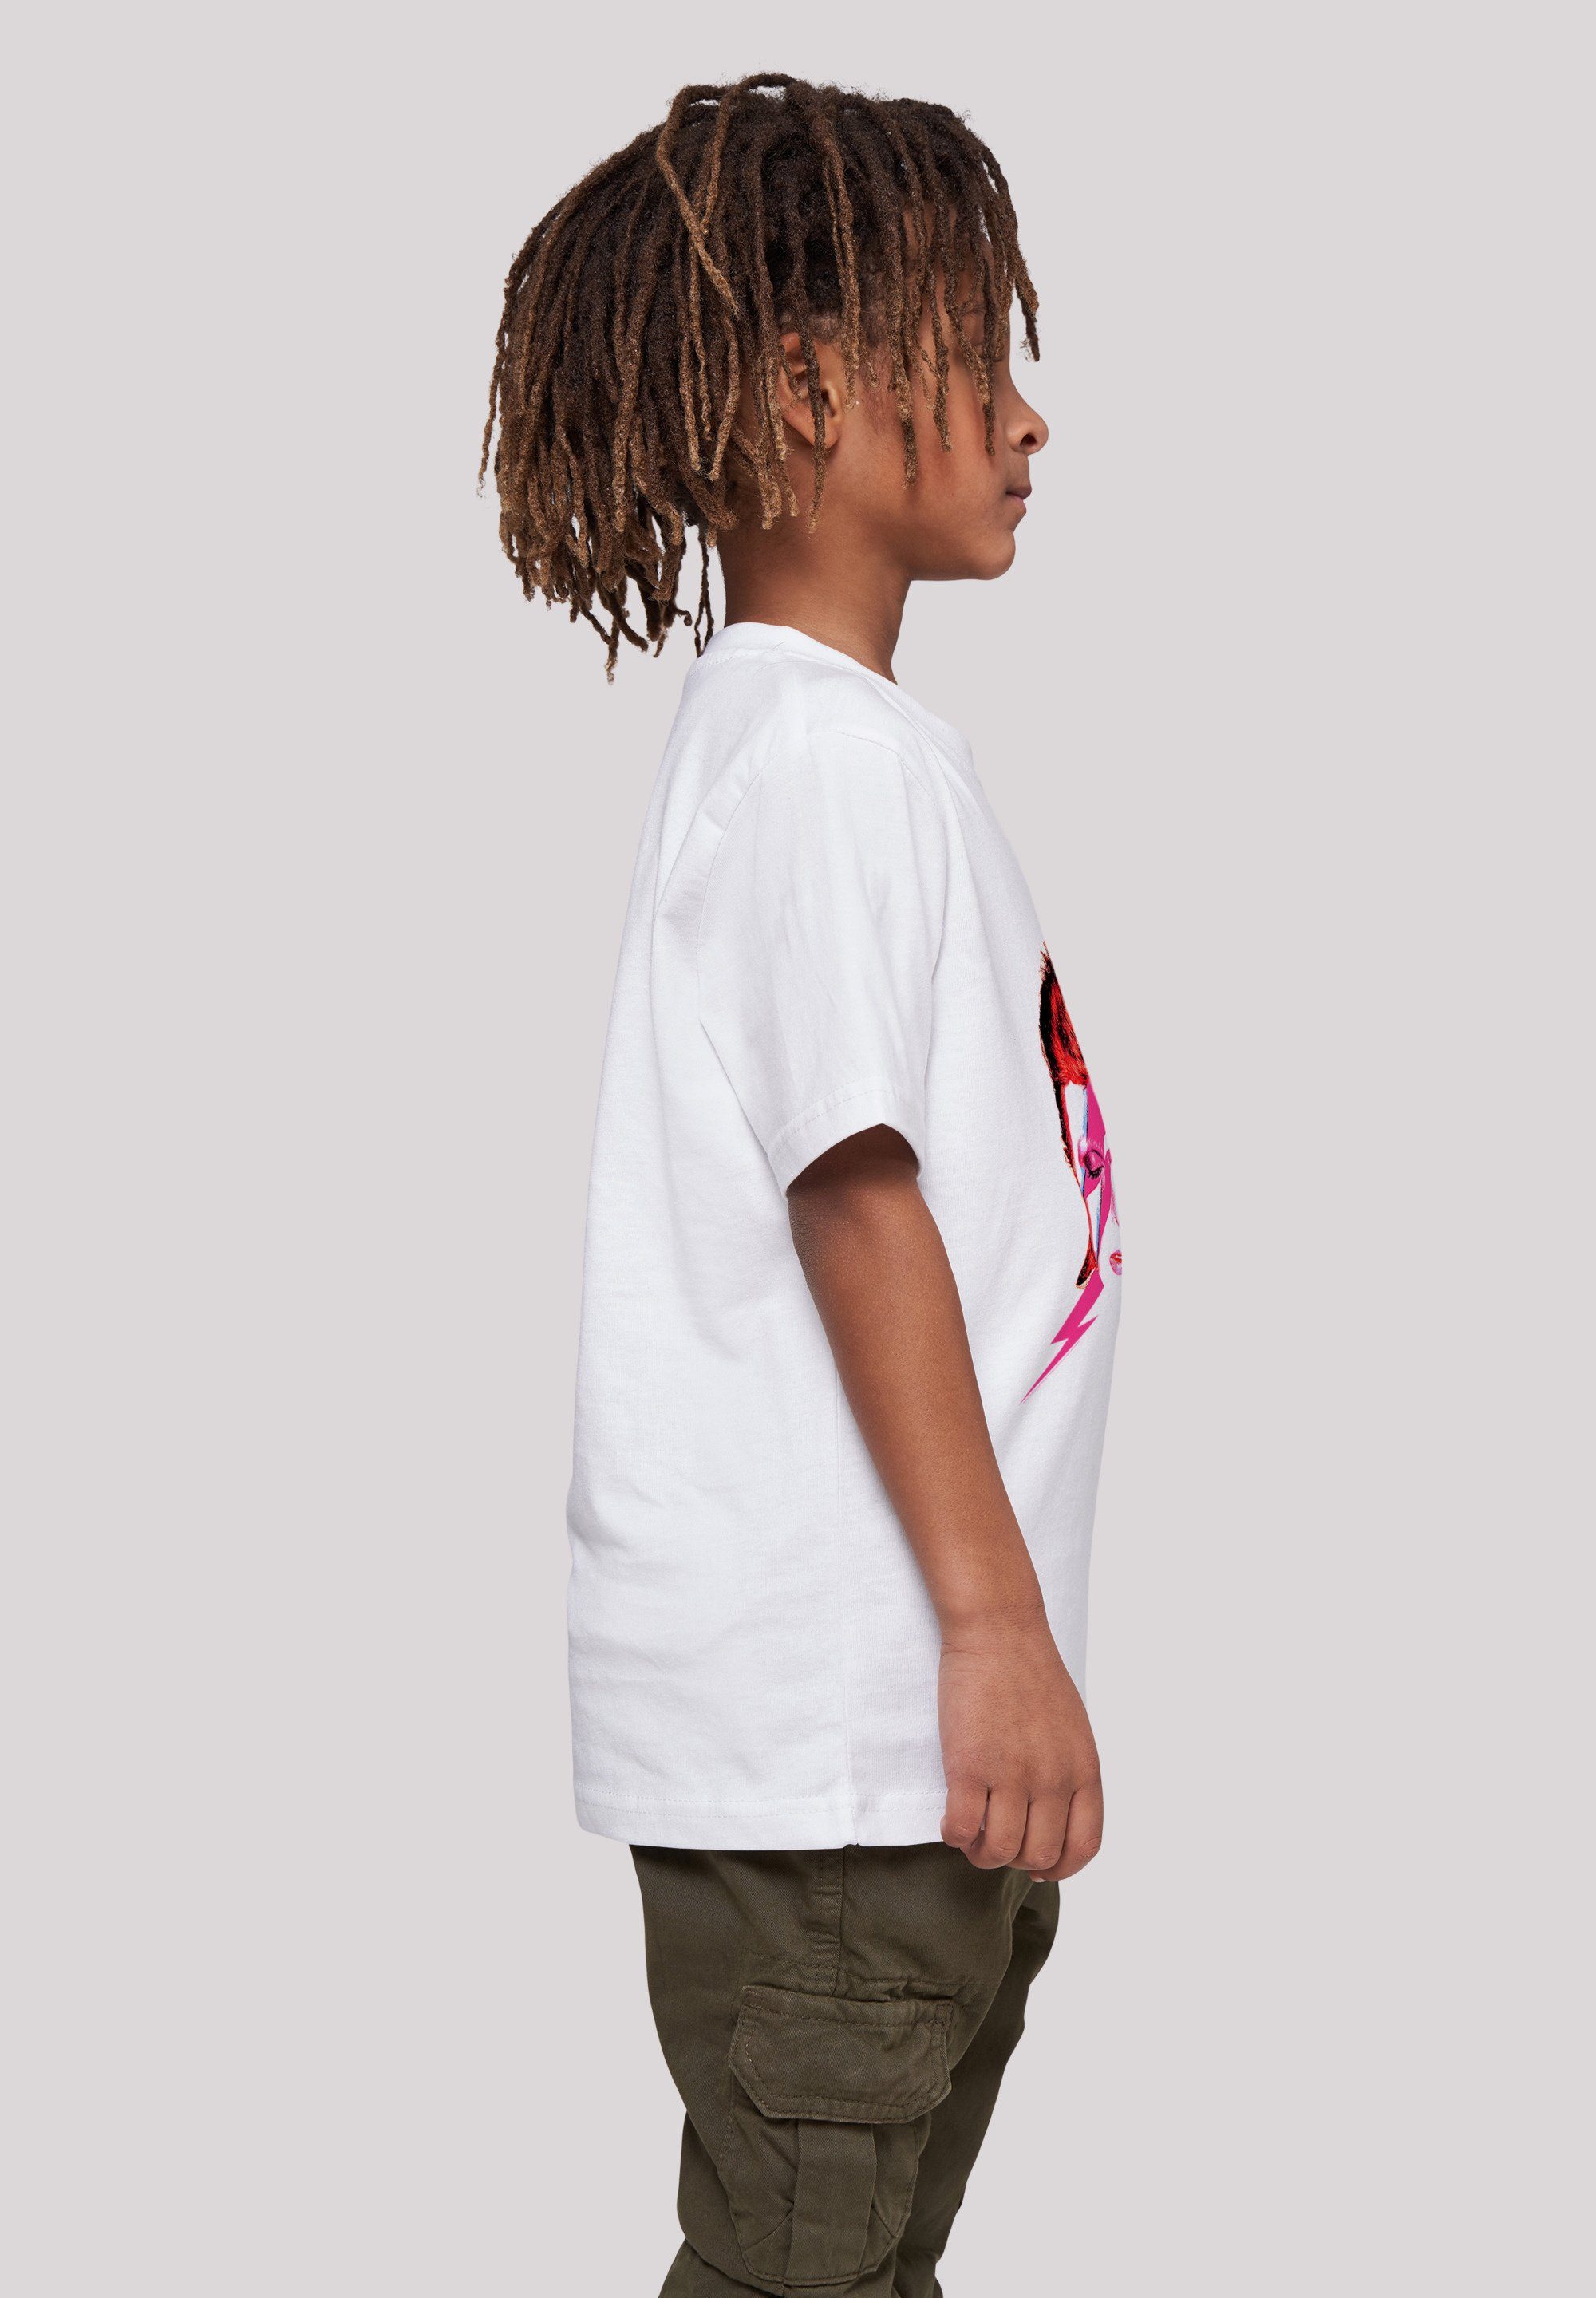 F4NT4STIC T-Shirt Aladdin Bowie David Lightning Sane Bolt Kinder,Premium Merch,Jungen,Mädchen,Bandshirt Unisex